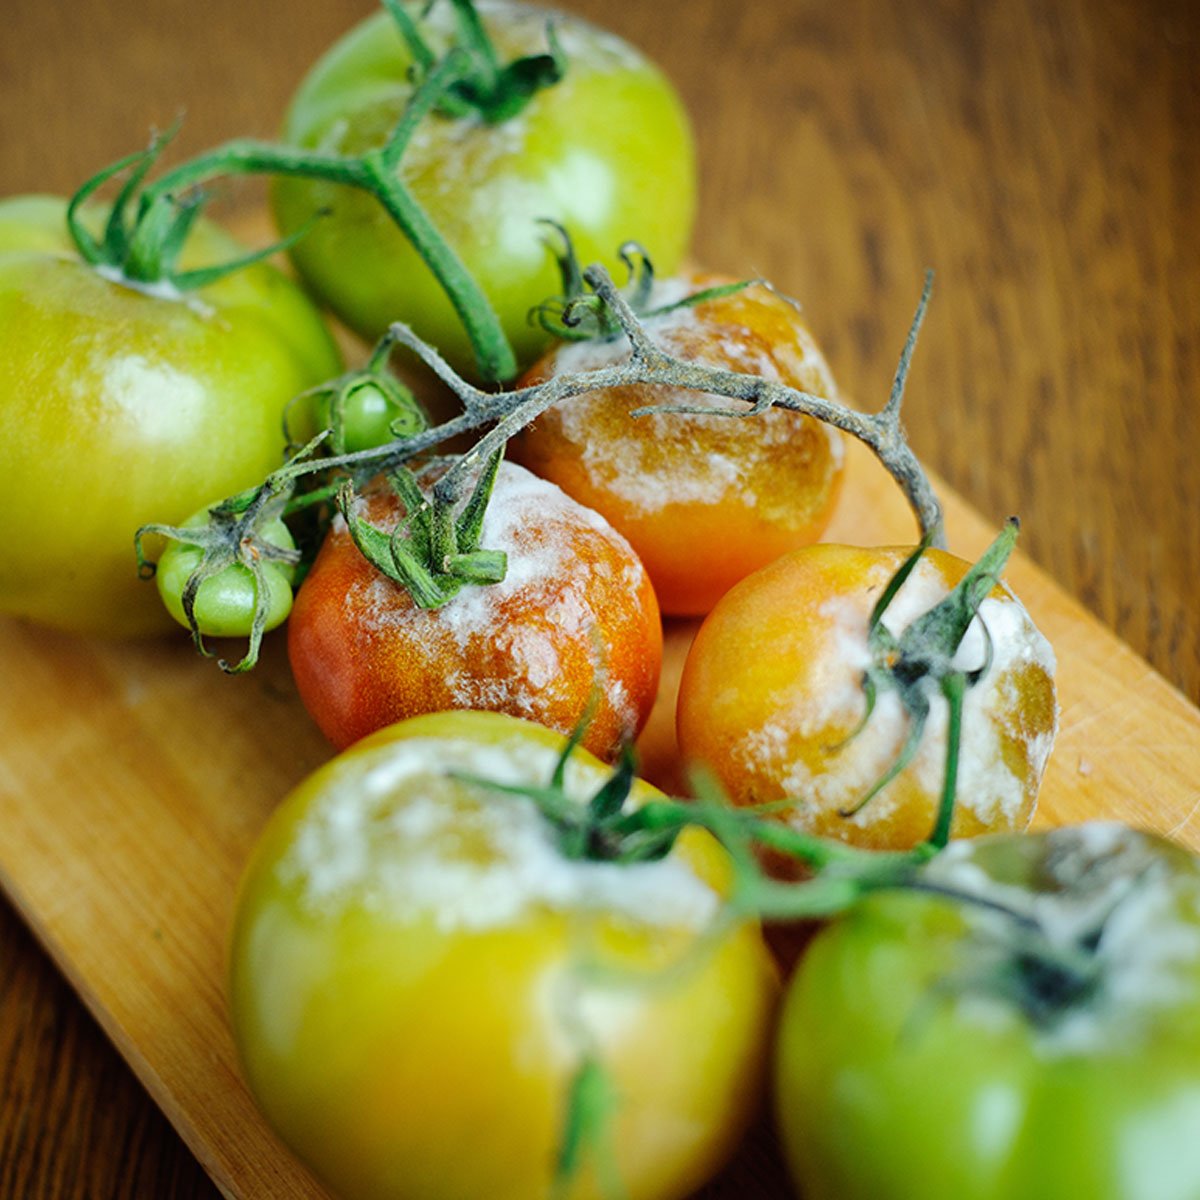 Botrytis on tomatoes